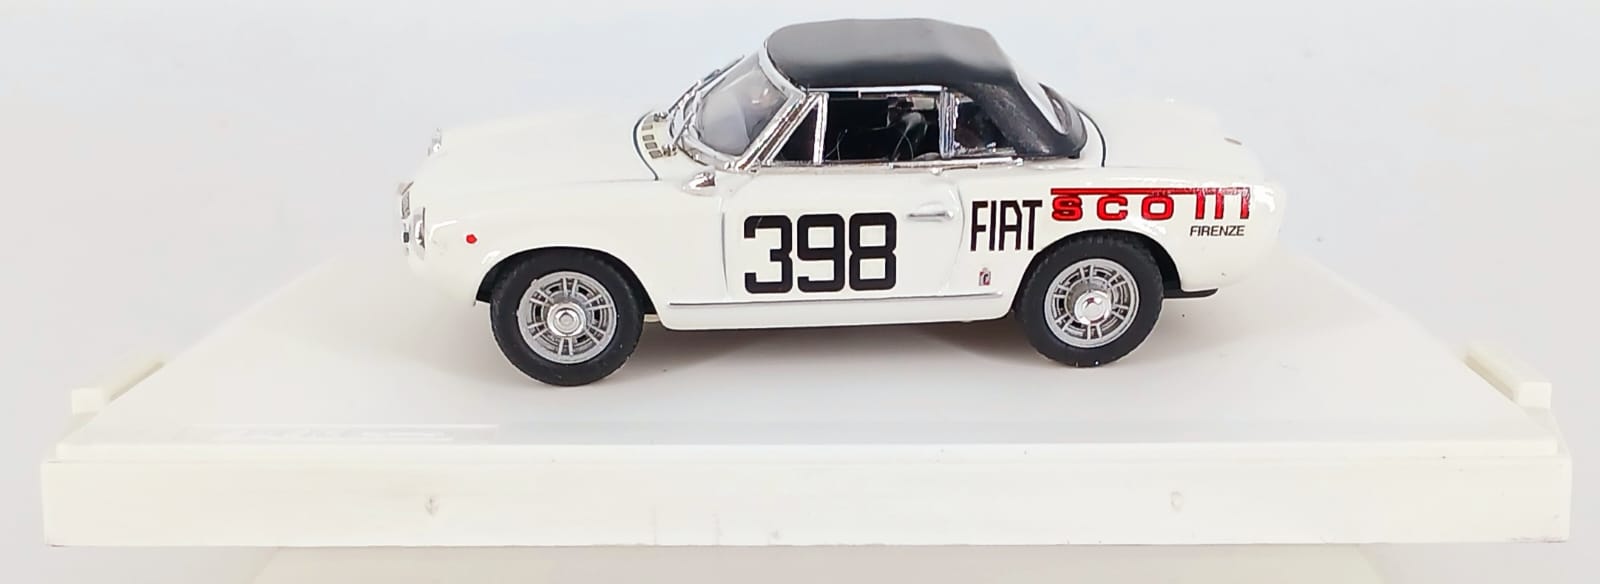 Fiat 124 Spyder 1400 Scotti fiat 1968  1/43